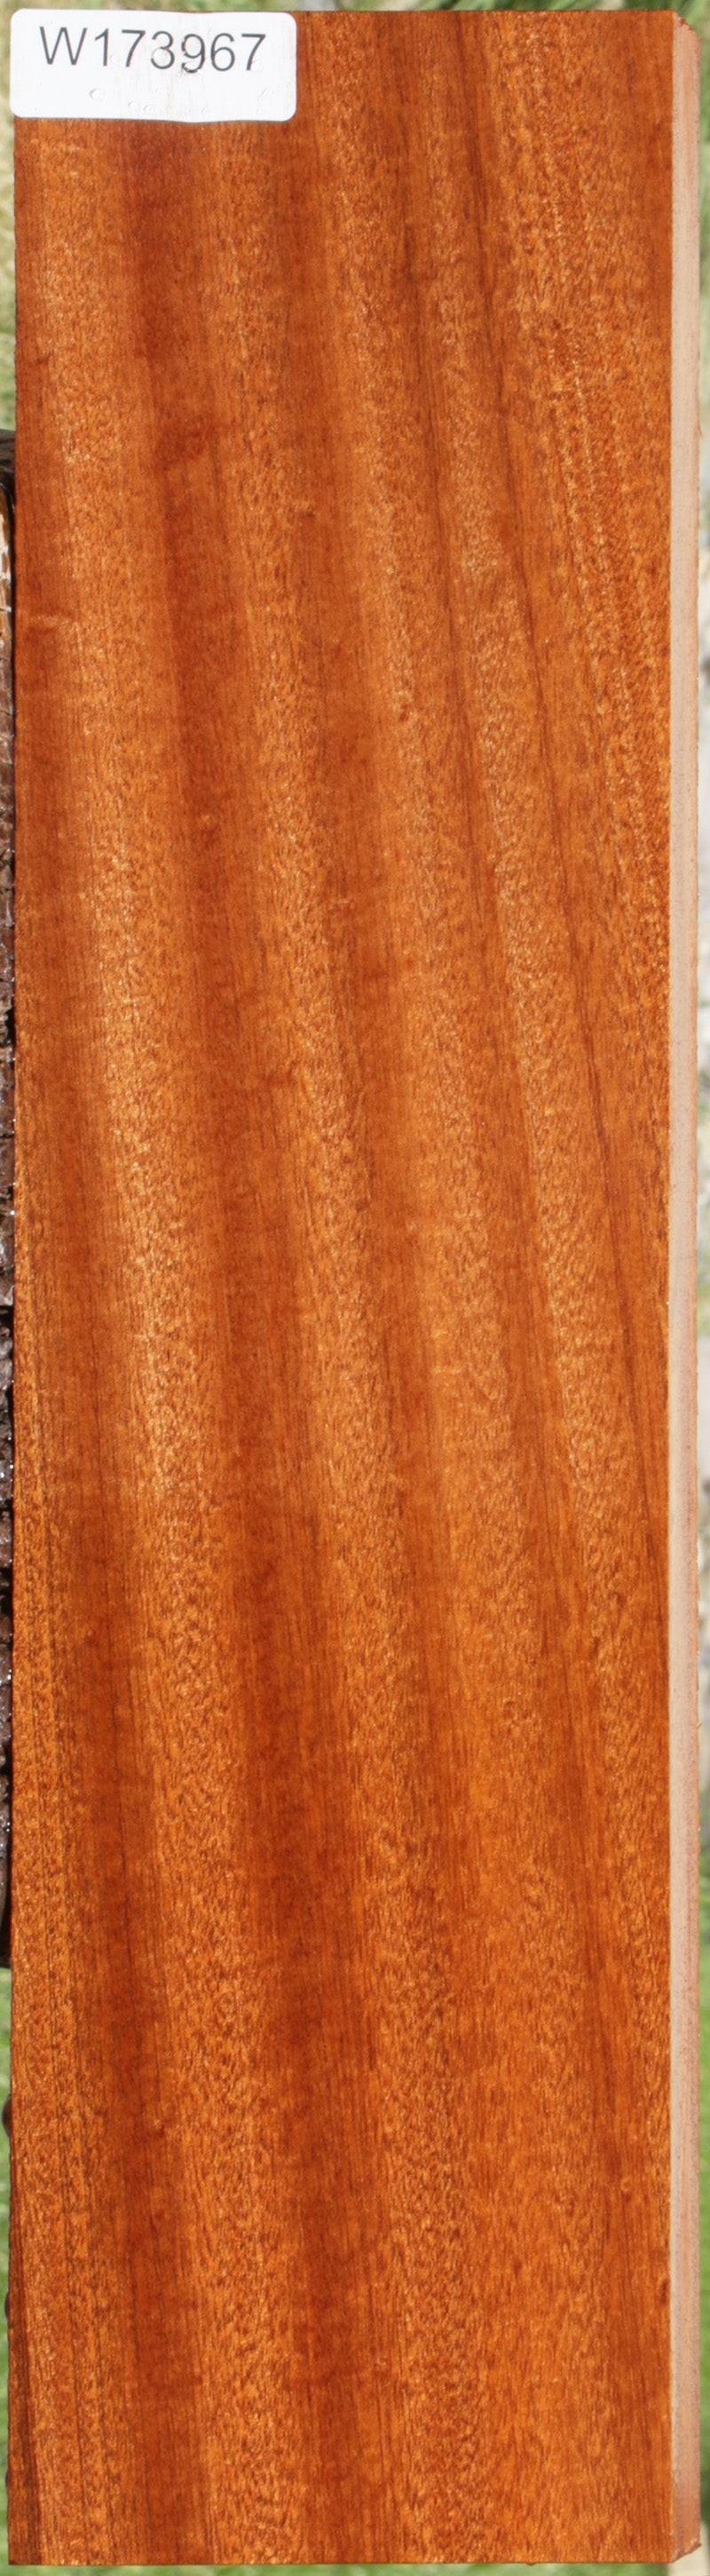 Sapele Lumber